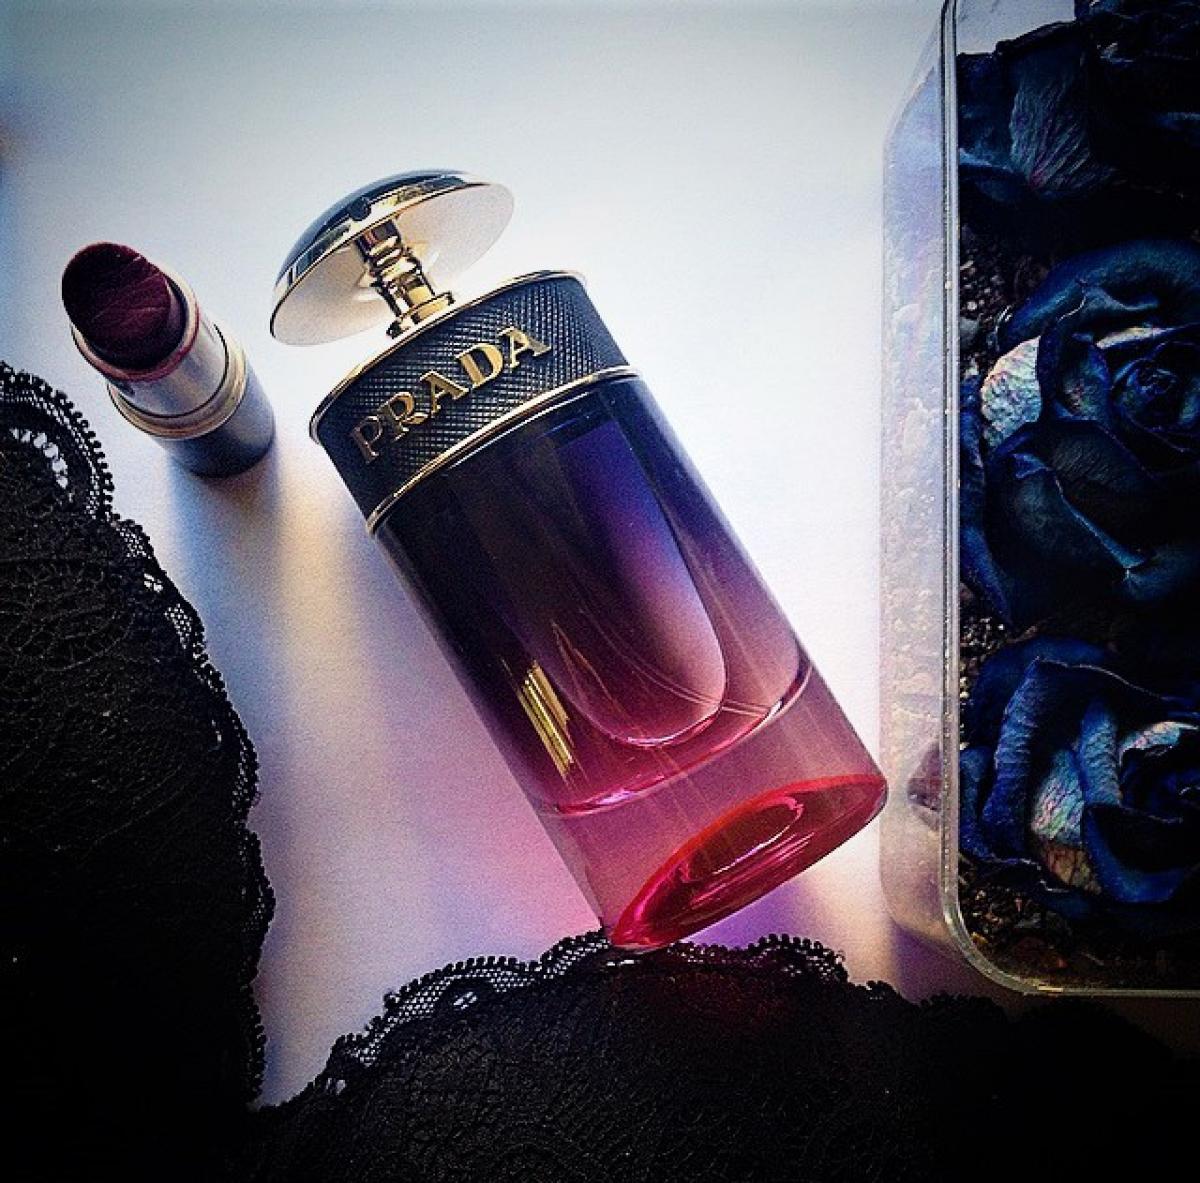 Prada Candy Night Prada perfume - a new fragrance for women 2019